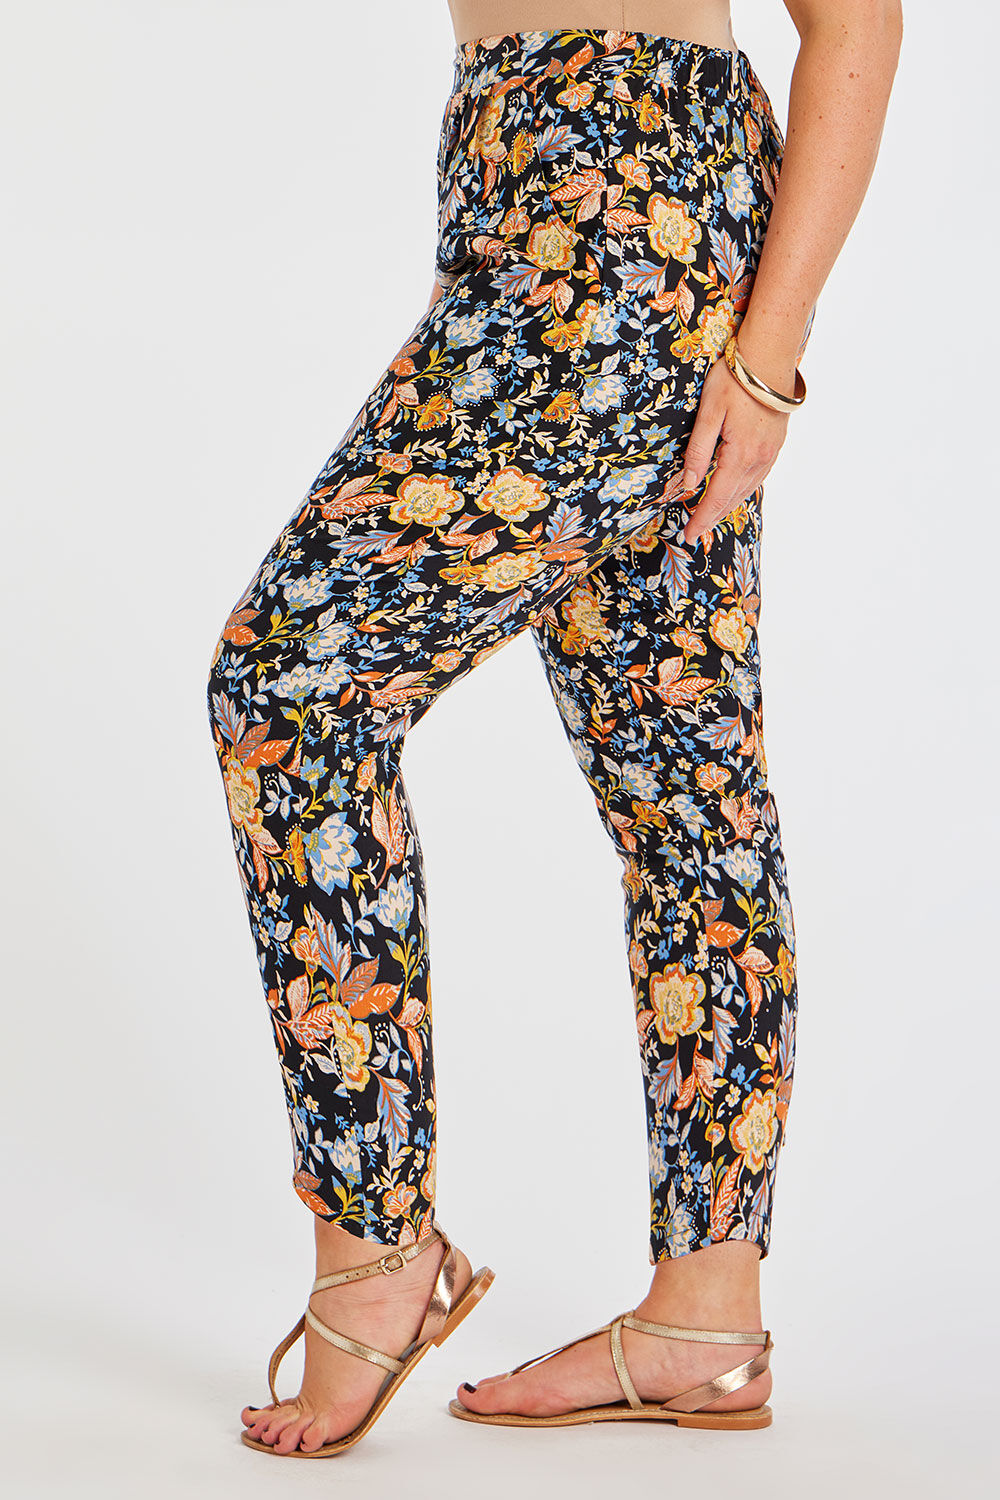 Boho Pants for Women Summer Casual Loose Fitting Smocked High Waisted  Lounge Pants Trousers Slacks Solid Color (X-Large, Khaki) - Walmart.com